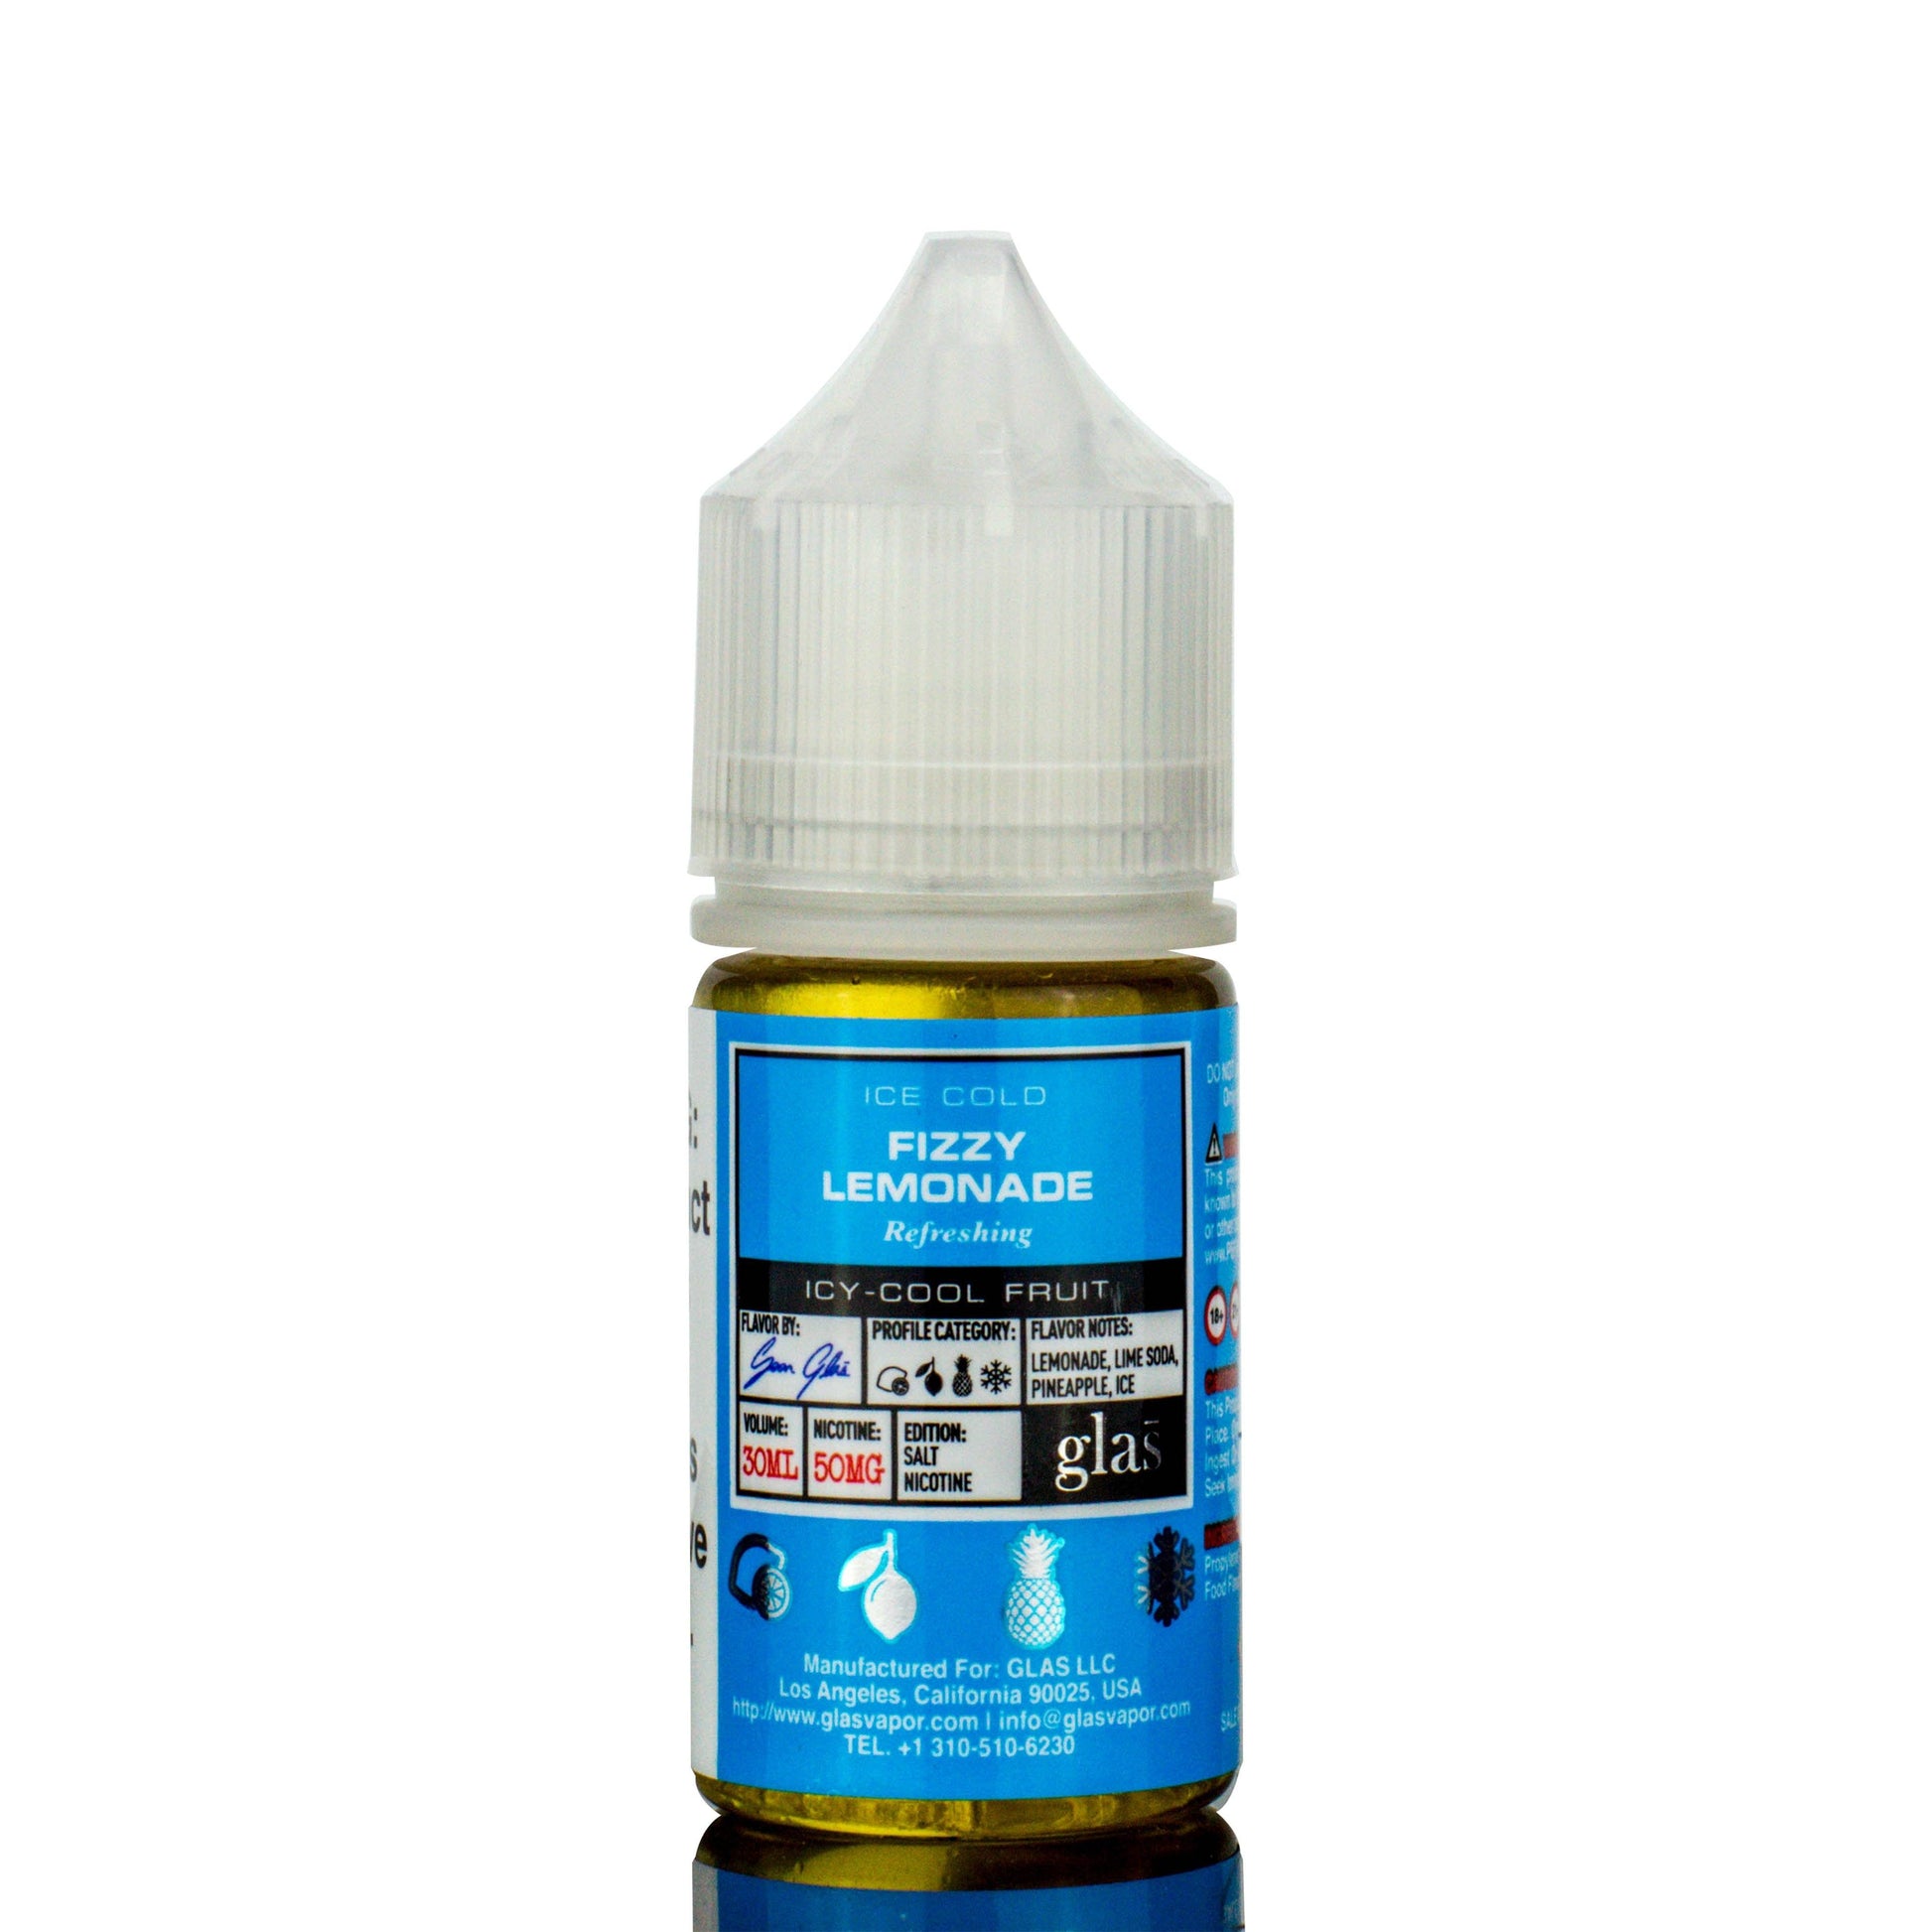 Fizzy Lemonade by GLAS BSX Salt Tobacco Free Nicotine Series 30mL Bottle